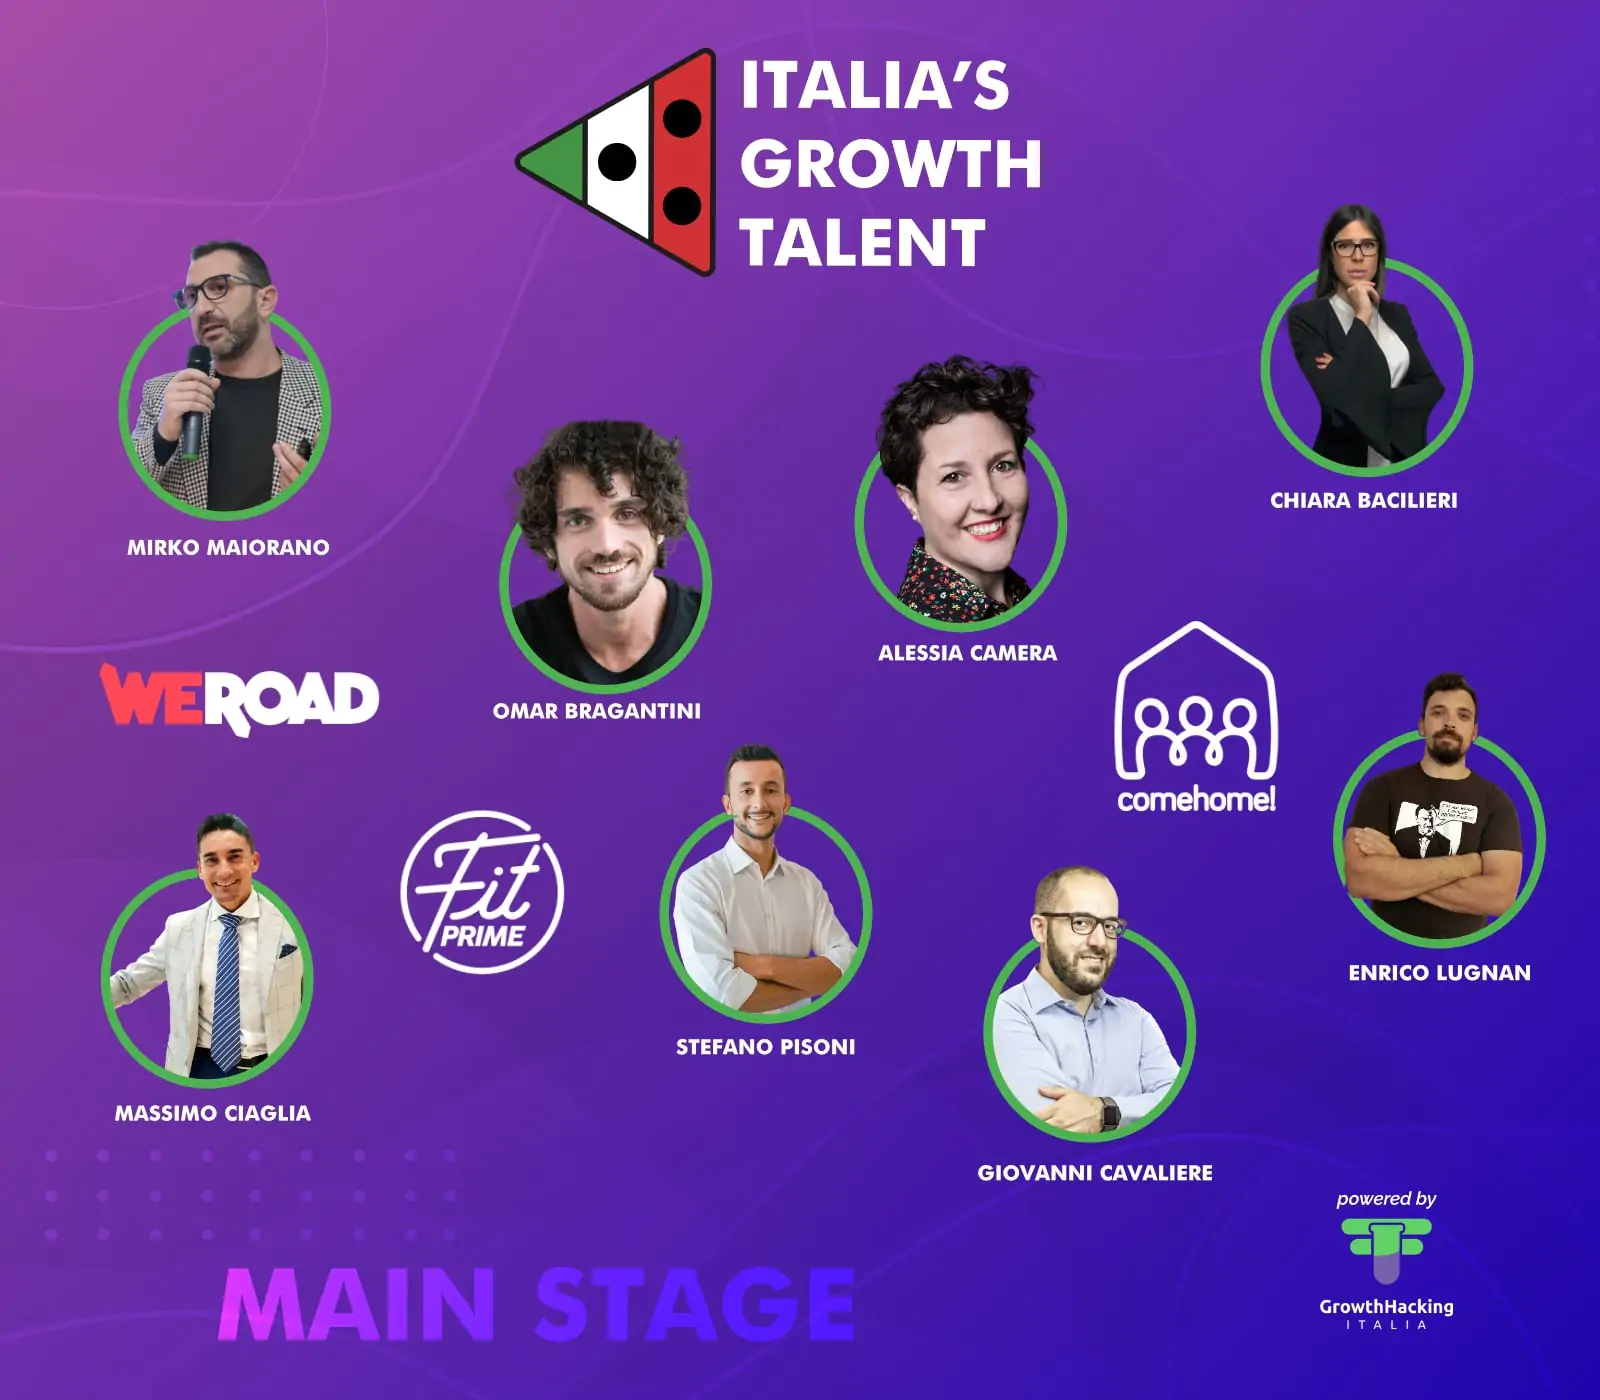 italias growth talent 2020 conferenza